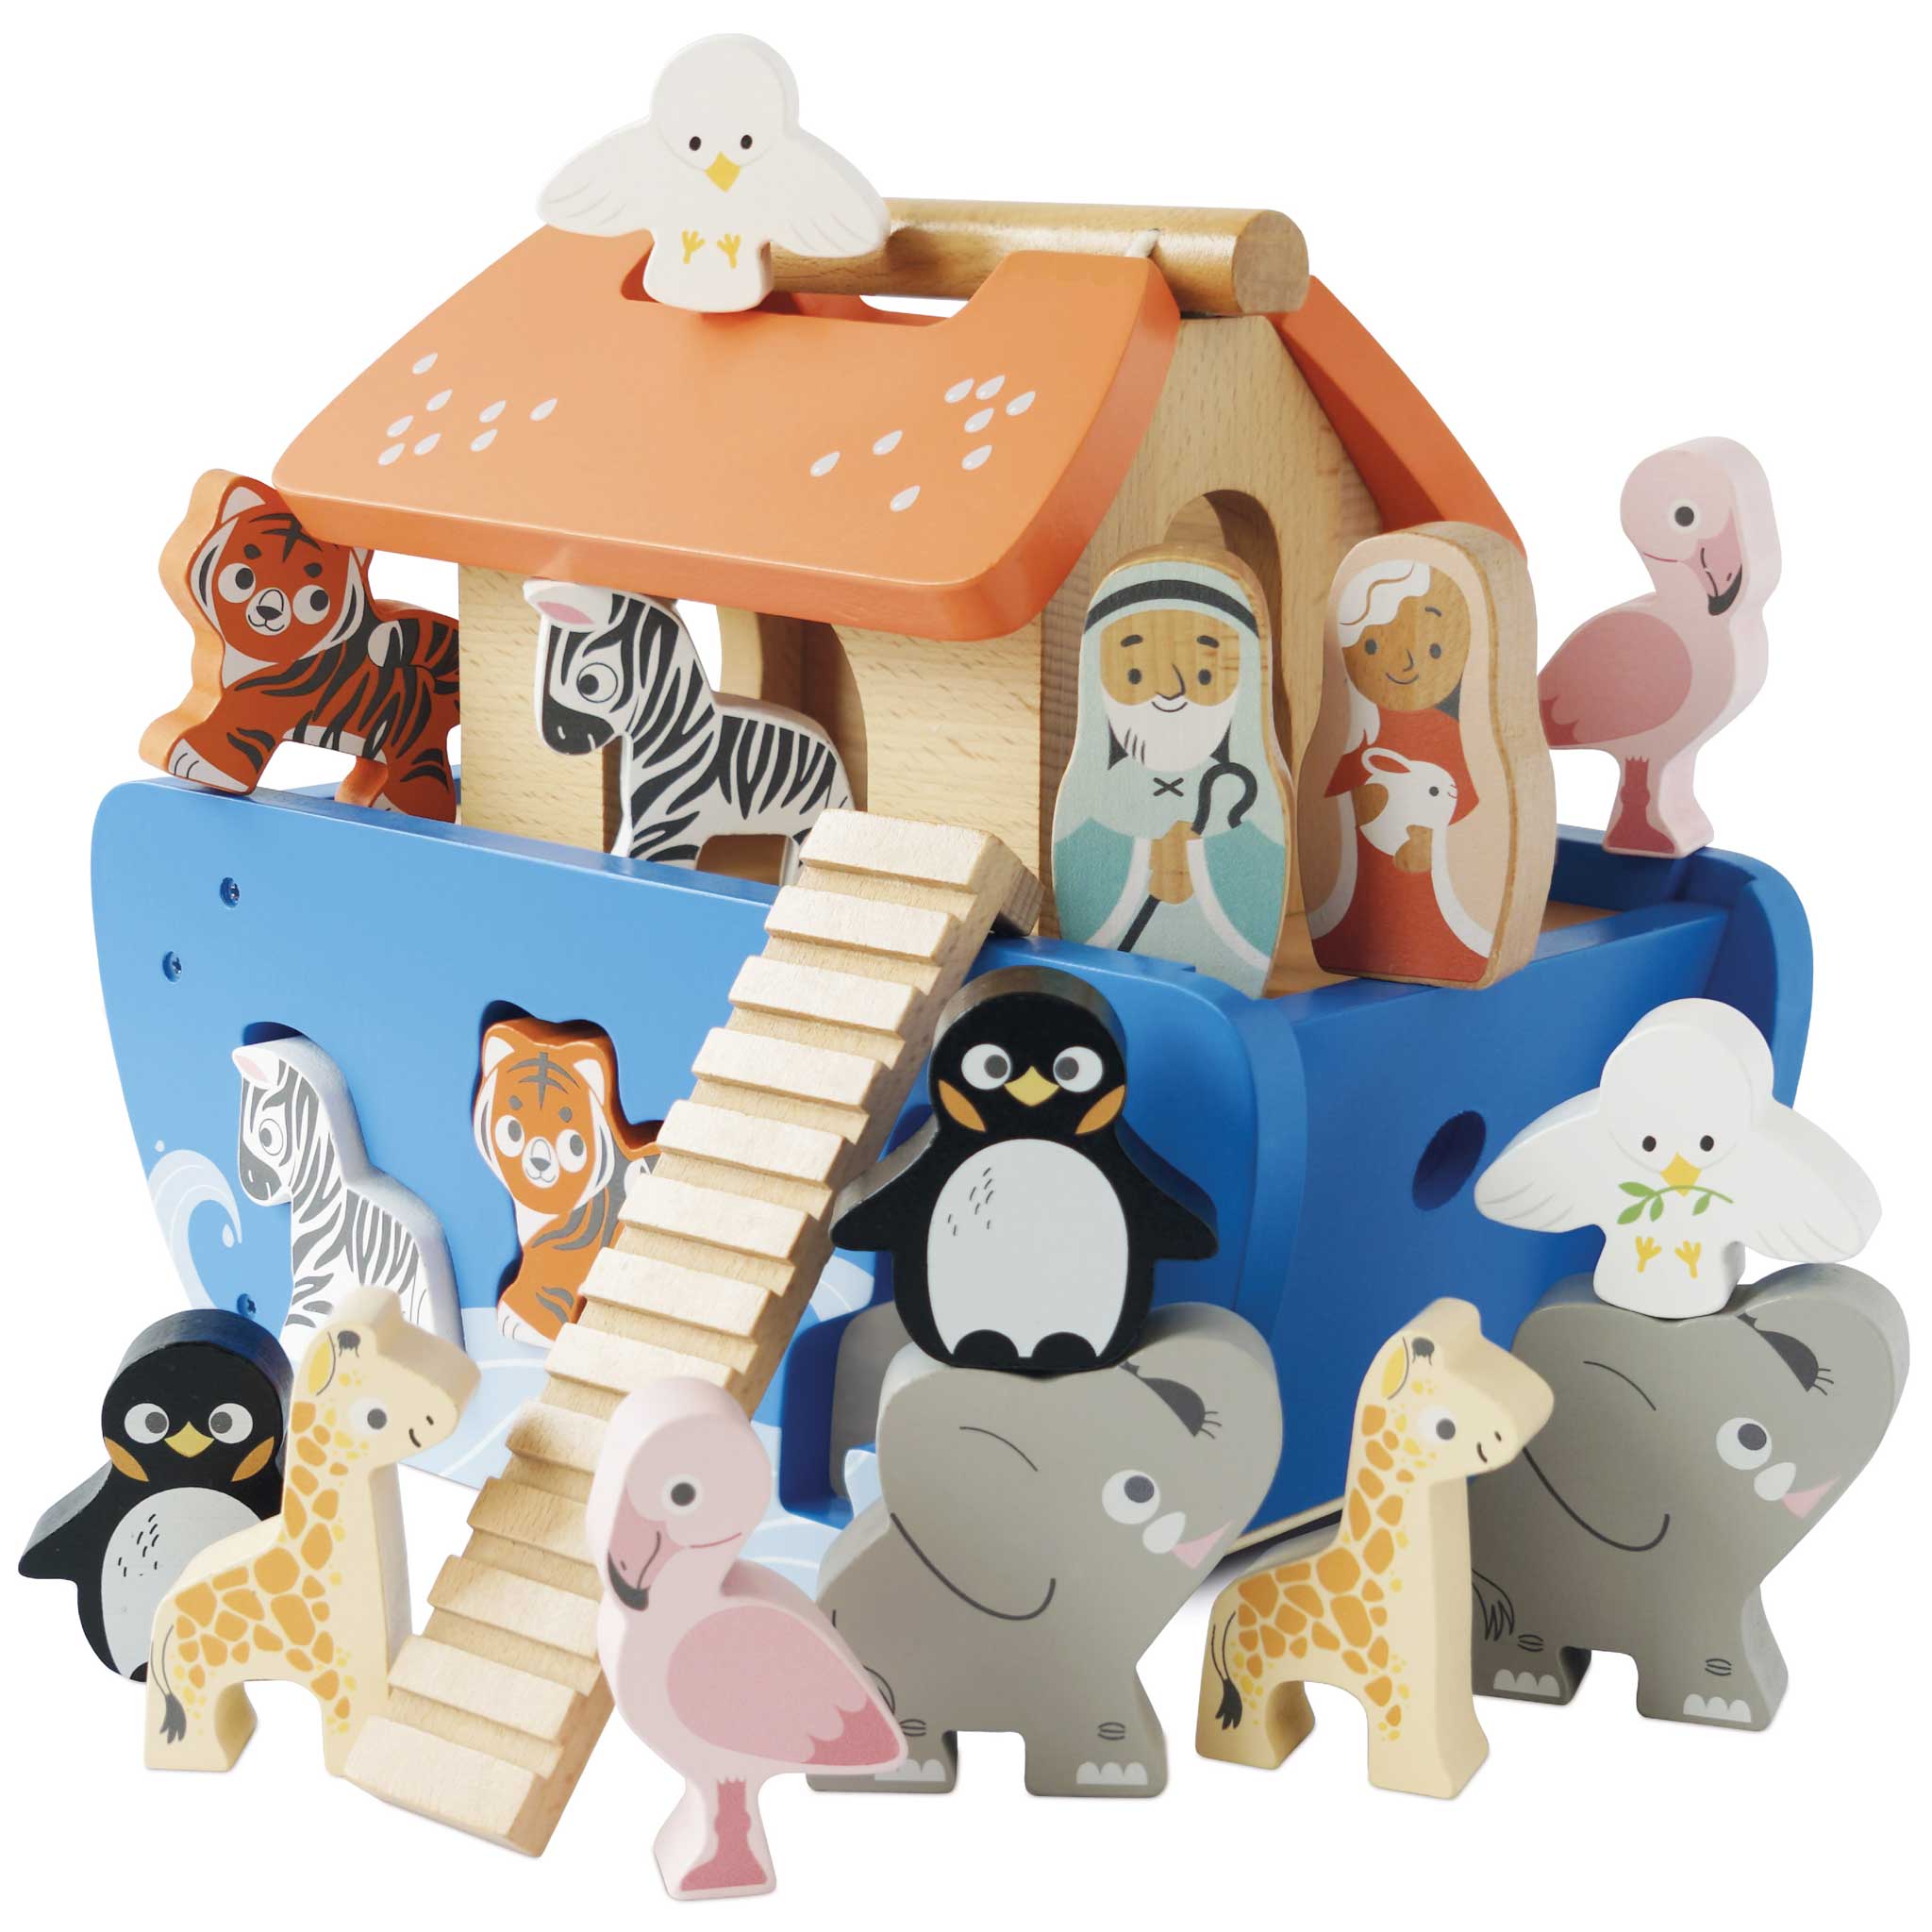 Wooden Noahs Ark Toy Set with 14 Wooden Toy Animals –